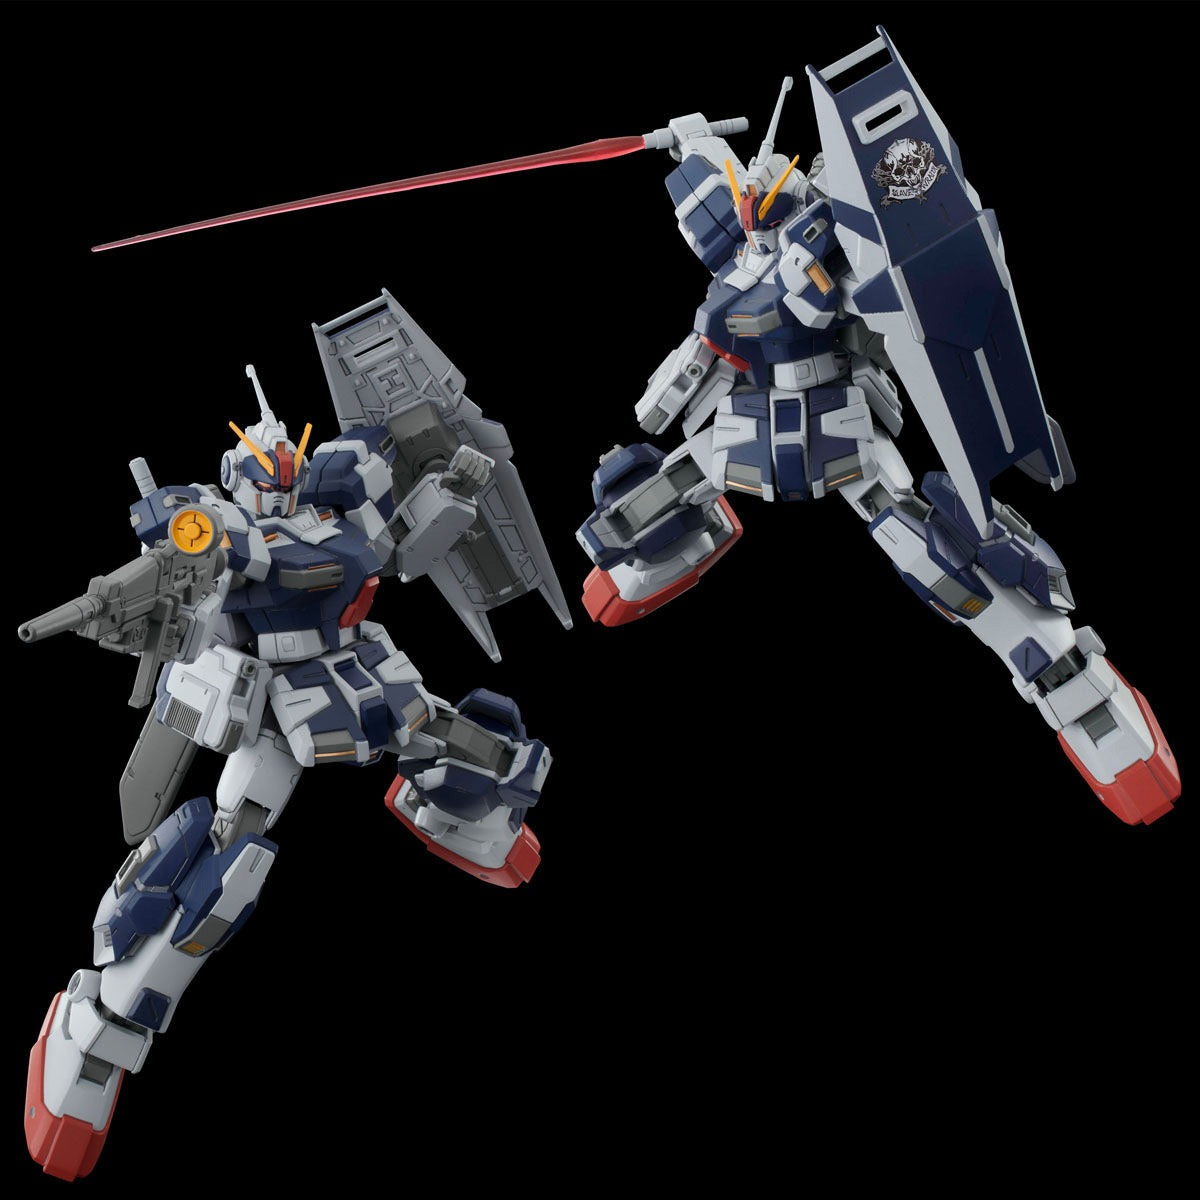 Gundam 1/144 HGUC Mobile Suit Gundam Side Story Mising Link RX-80PR-2 Pale Rider Cavalry Model Kit Exclusive